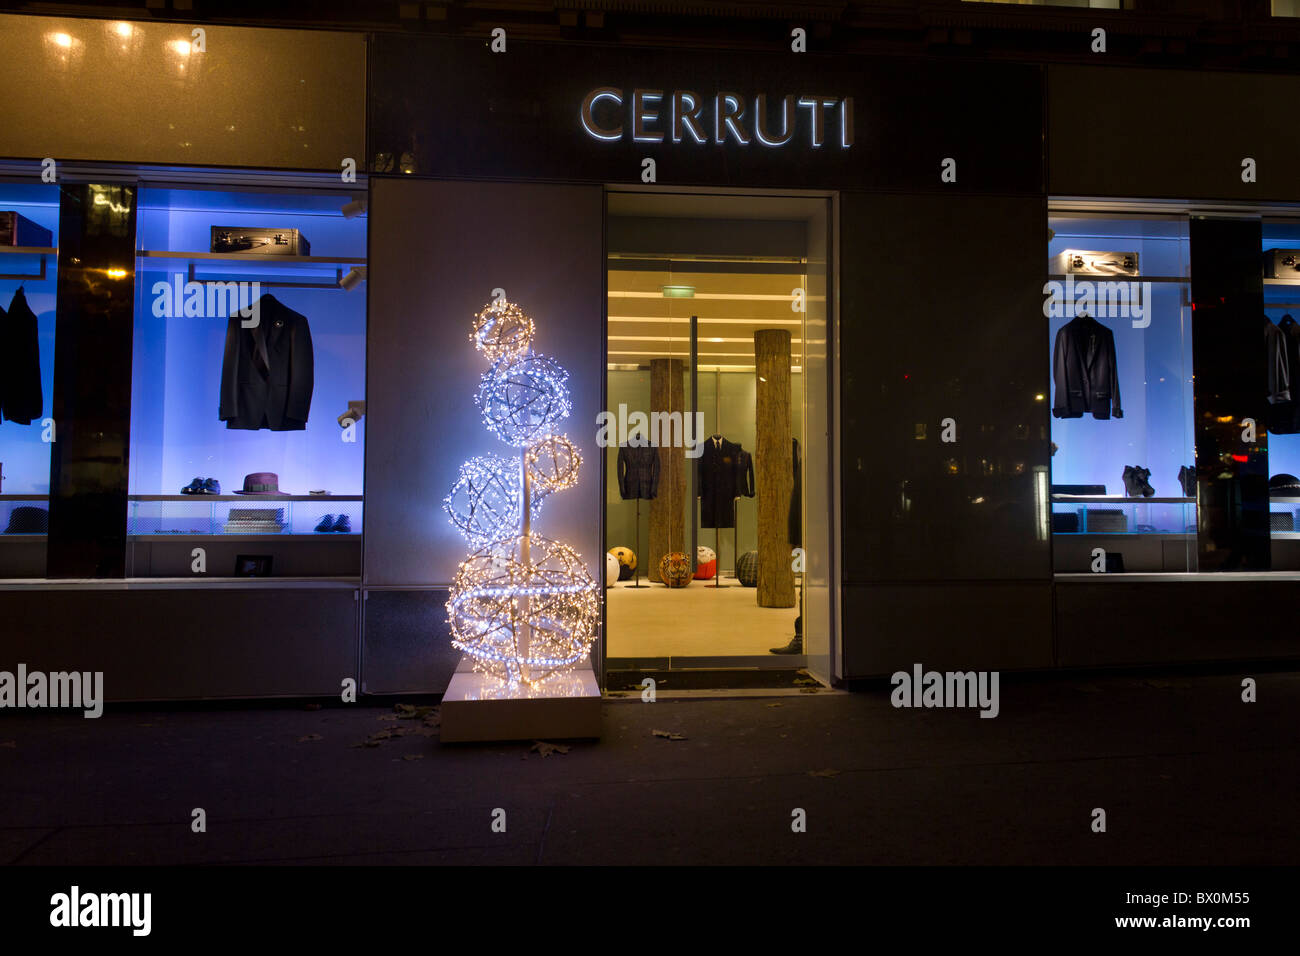 Cerruti luxury fashion shop with Christmas decoration, rue Royale, Paris, France Stock Photo